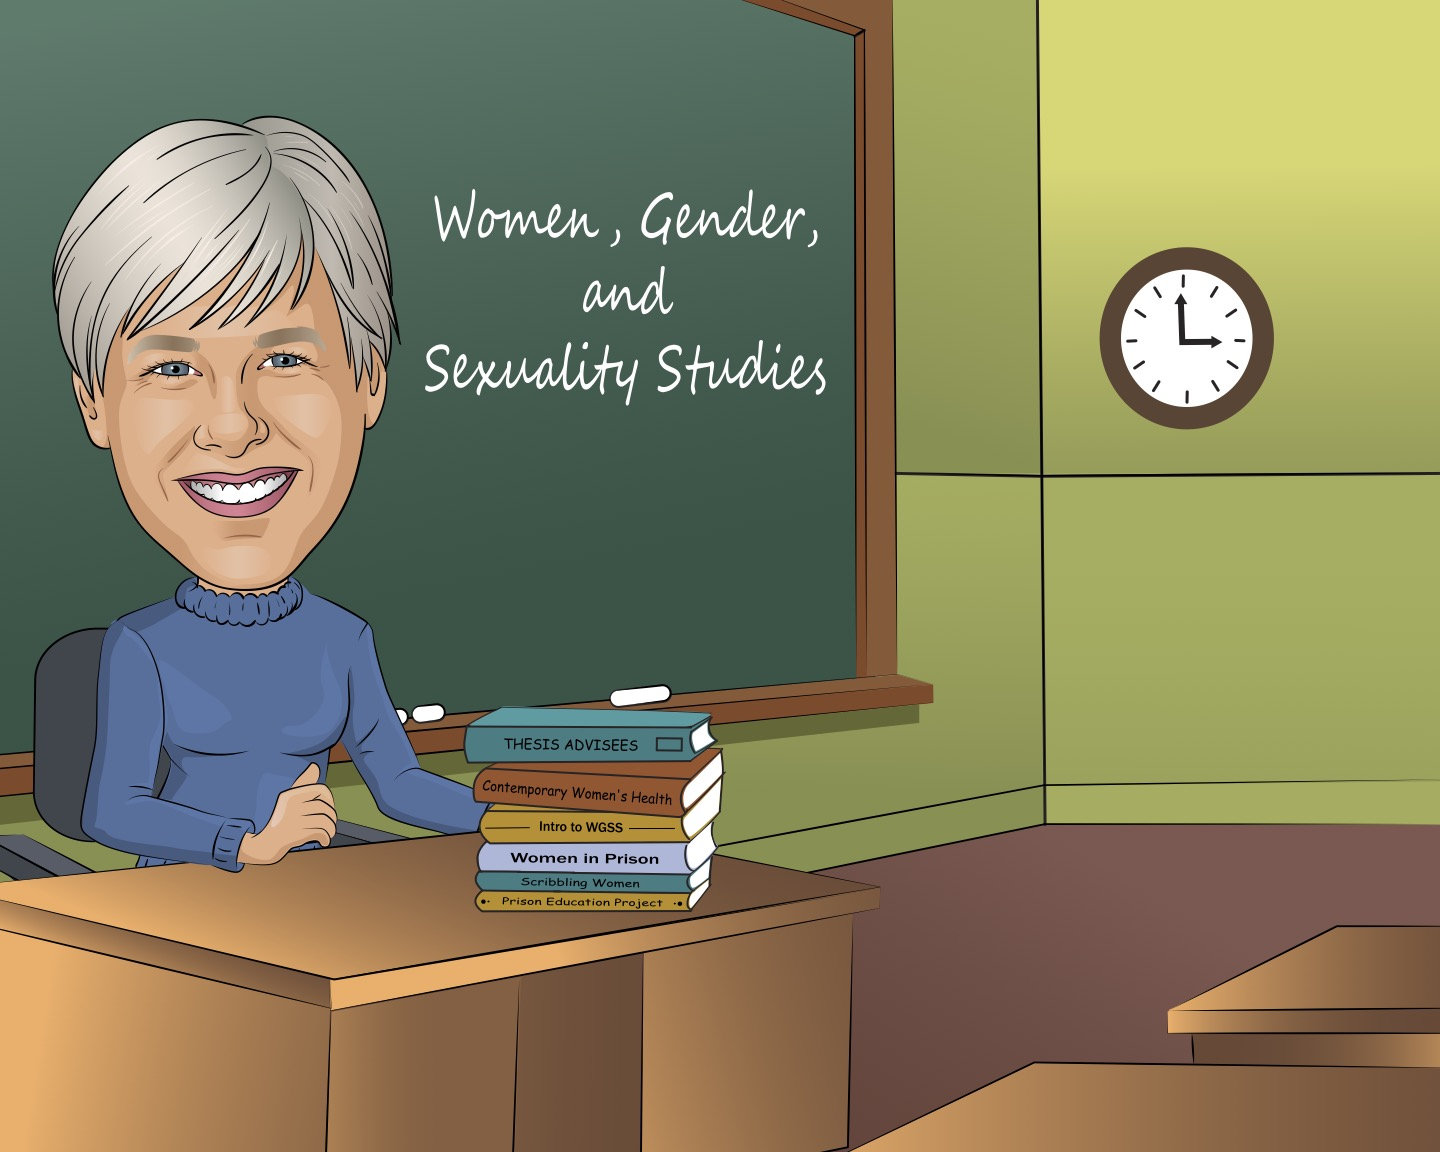 Woman Professor Gift - Custom Caricature From Photo, Gender Studies, Womens Studies